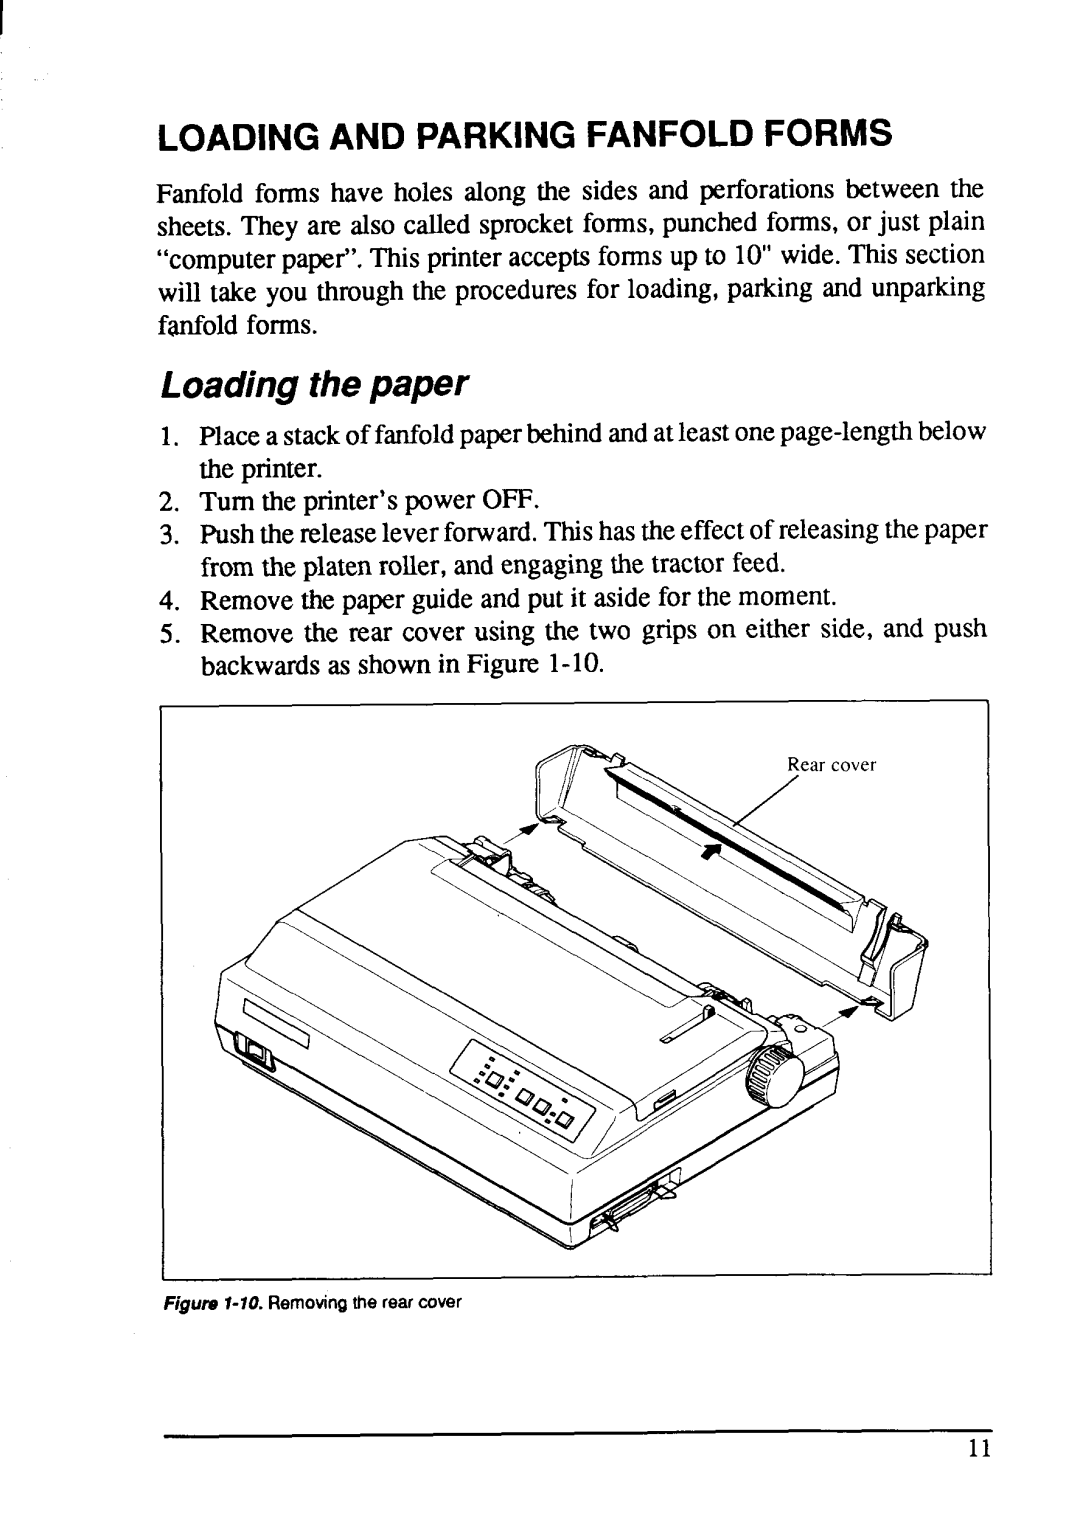 Star Micronics NX-1001 manual Loadingthepaper 